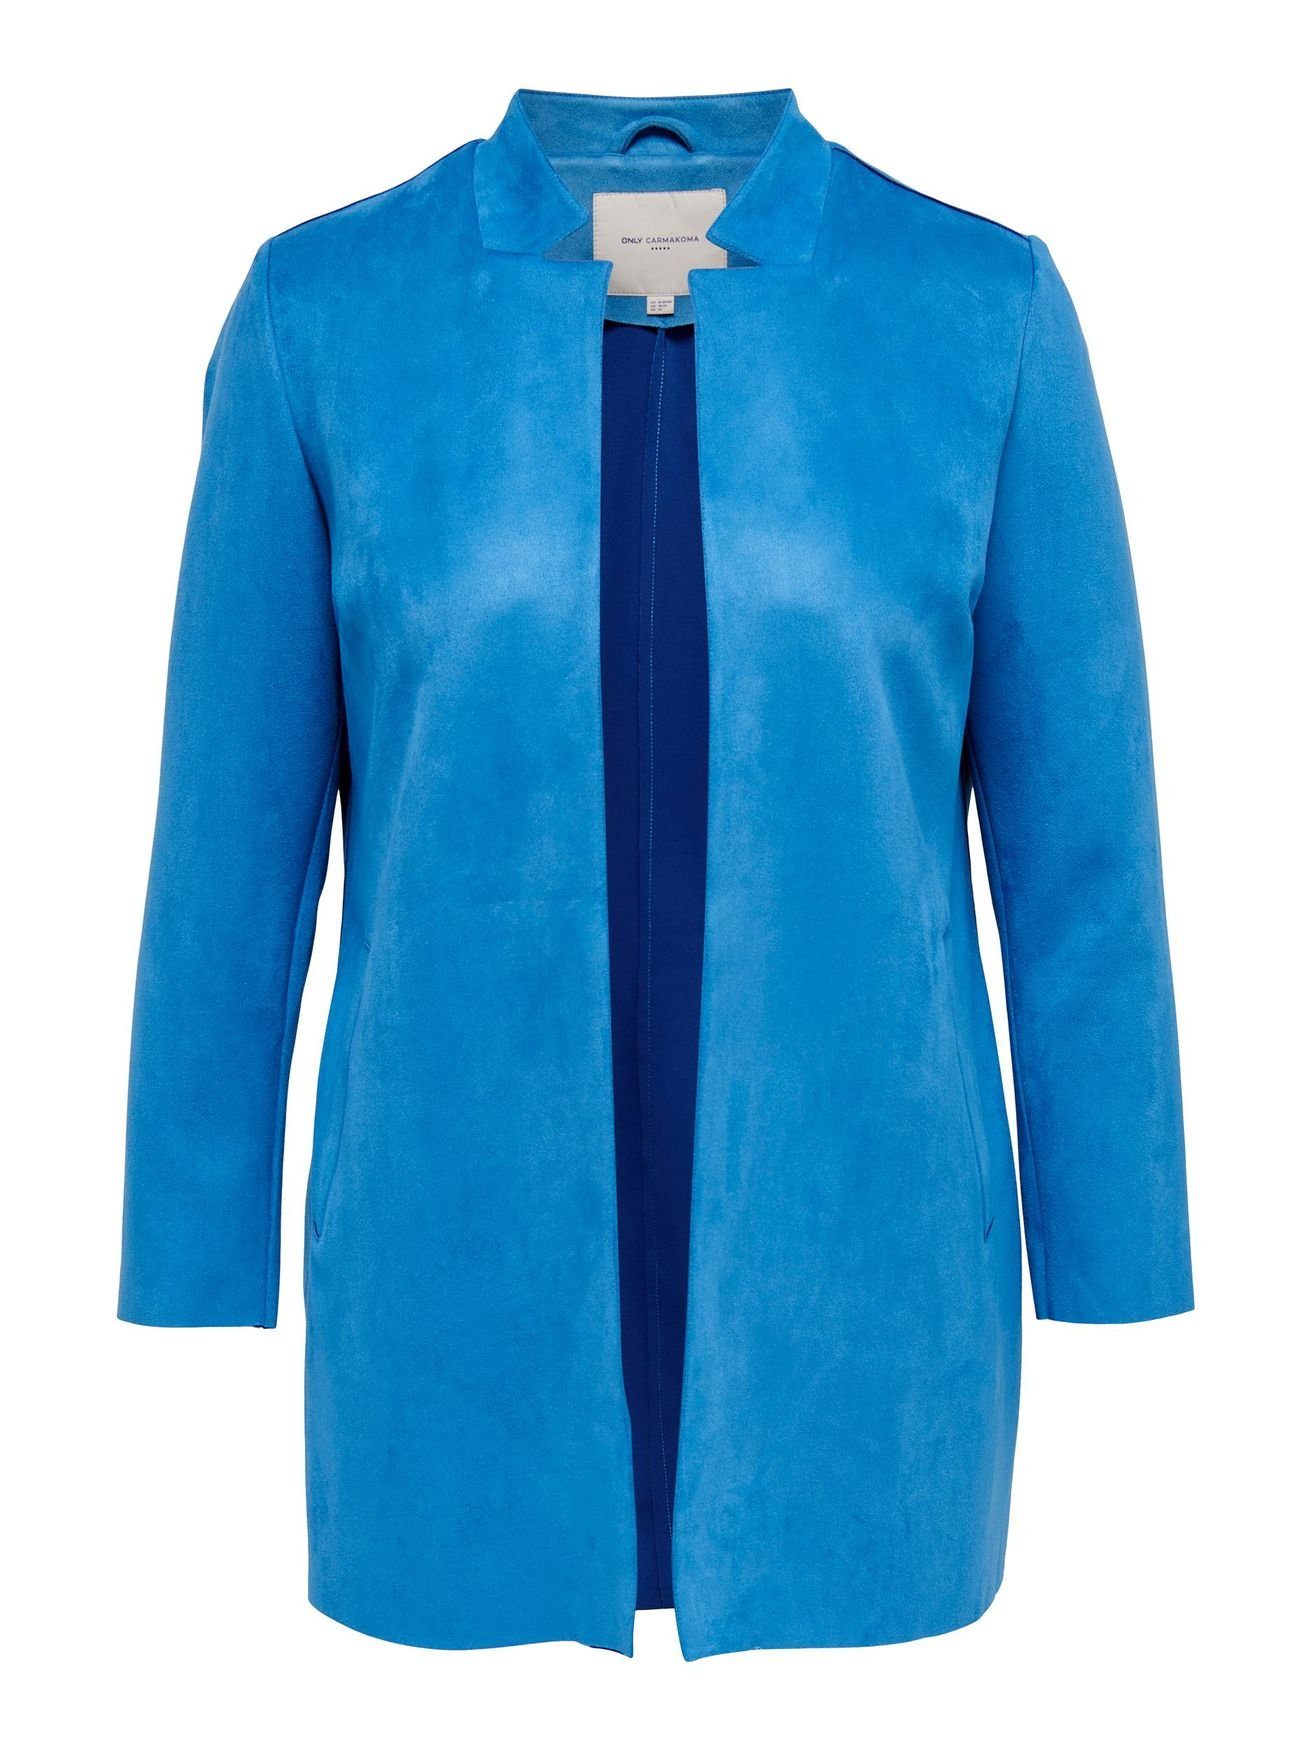 【Sonderangebot】 ONLY CARMAKOMA Kurzmantel Plus in Übergrößen Cardigan Blau 4537 Kunst Wildleder CARSOHO Size Coat Mantel